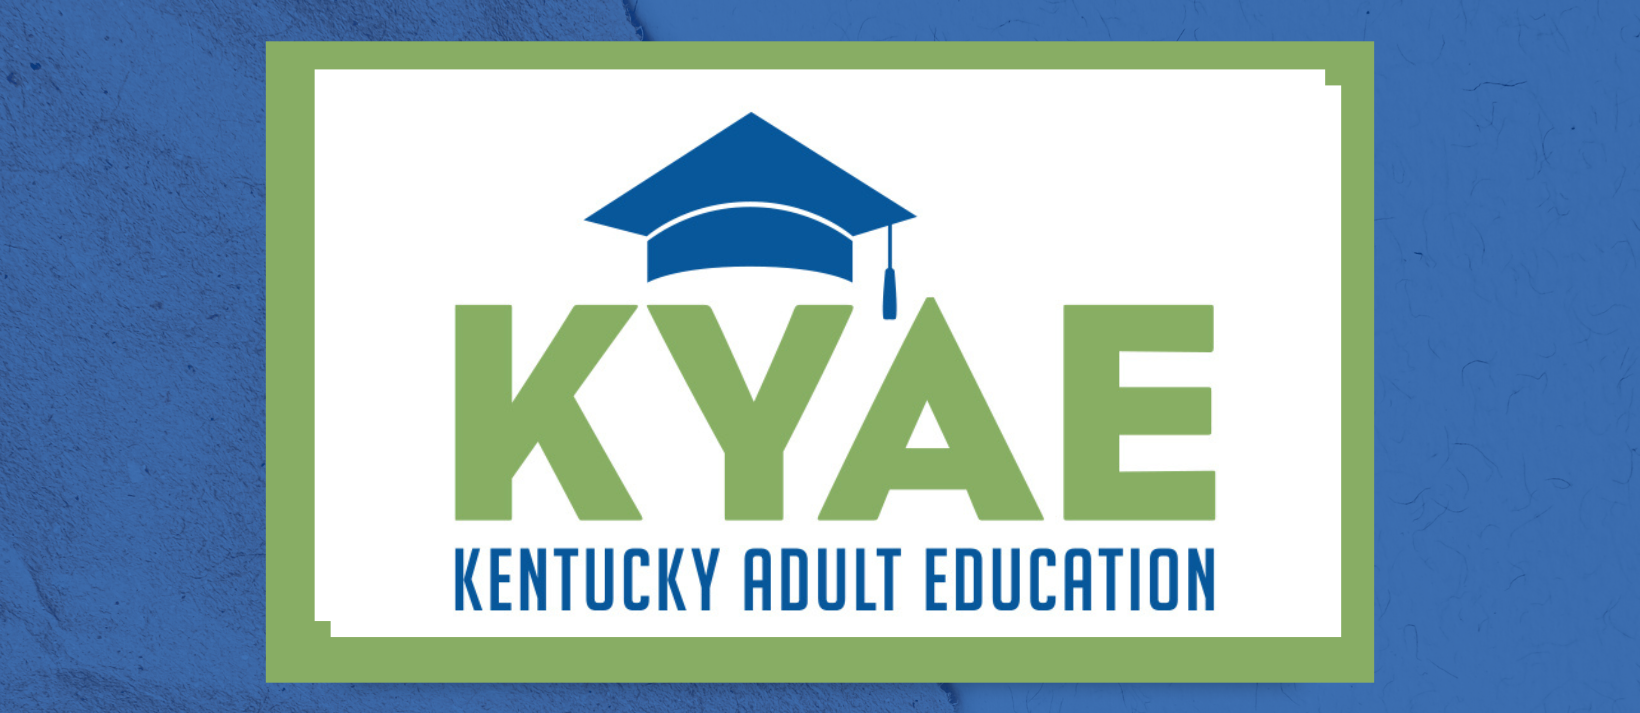 Kentucky Adult Education logo